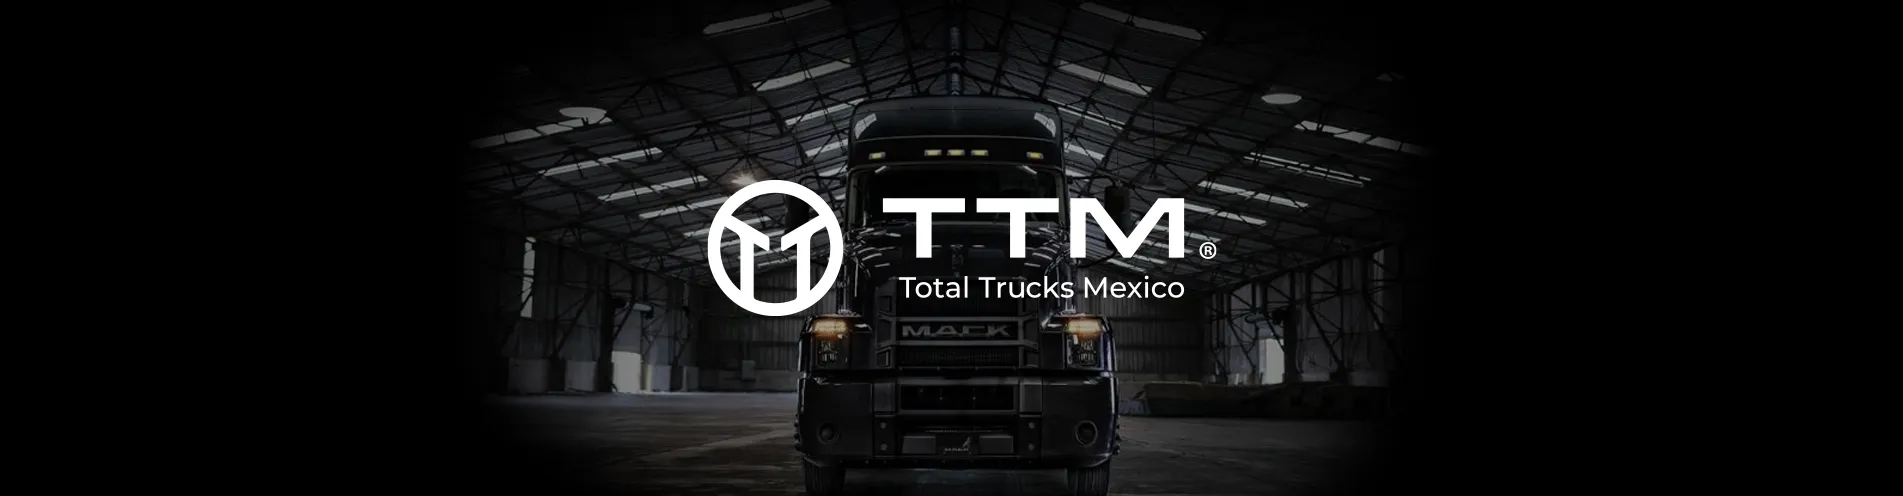 Logotipo de Total Trucks México con un camión Mack color negro de fondo